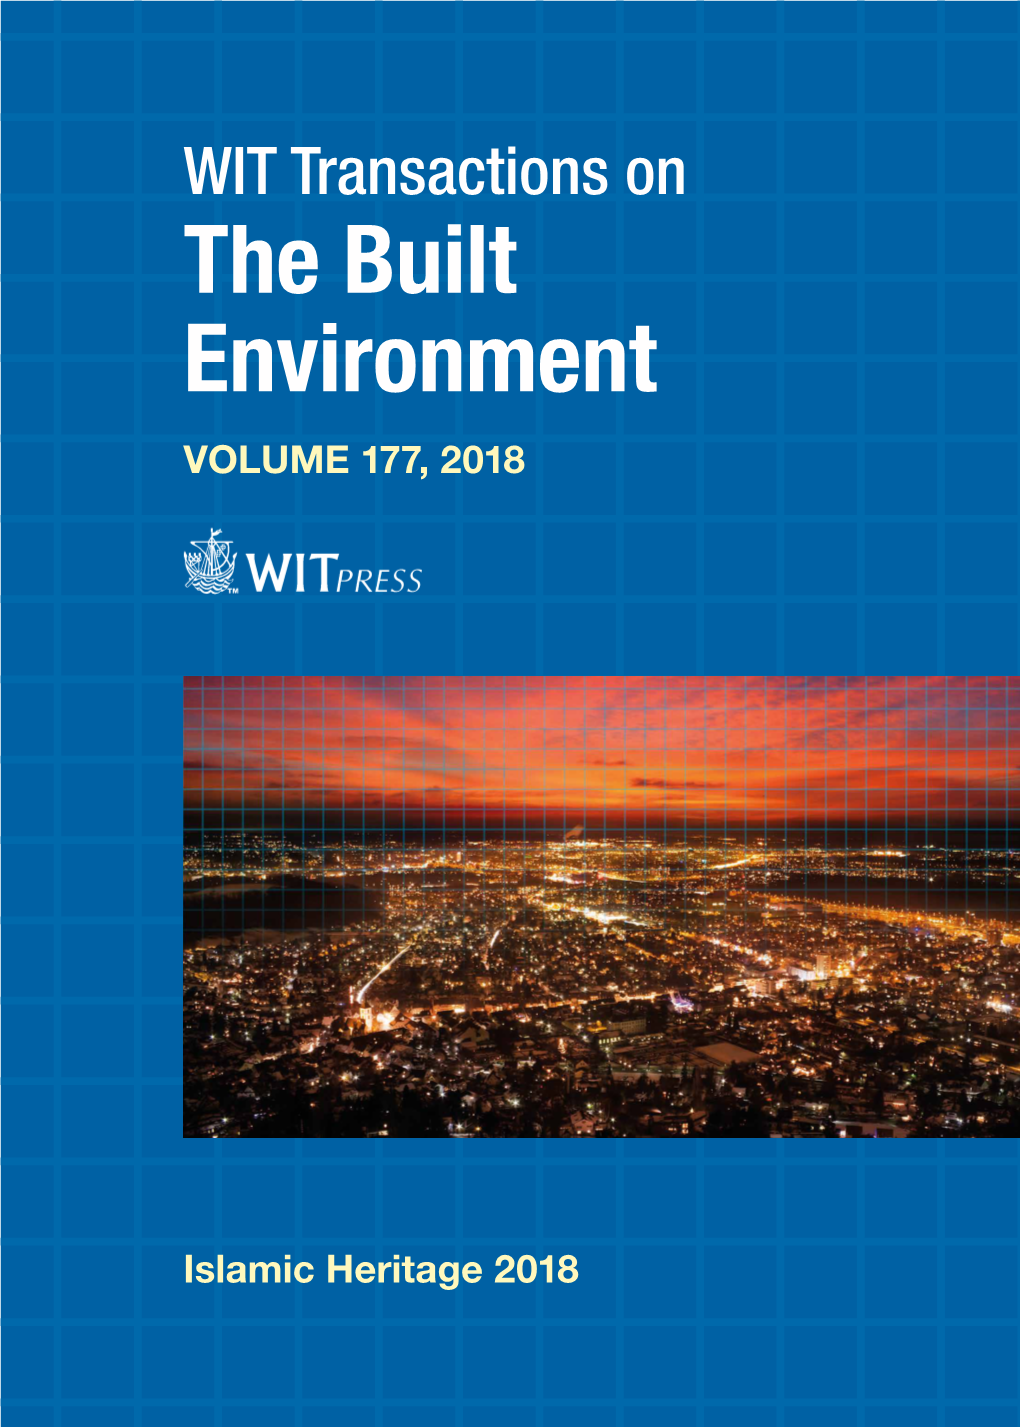 The Built Environment VOLUME 177, 2018